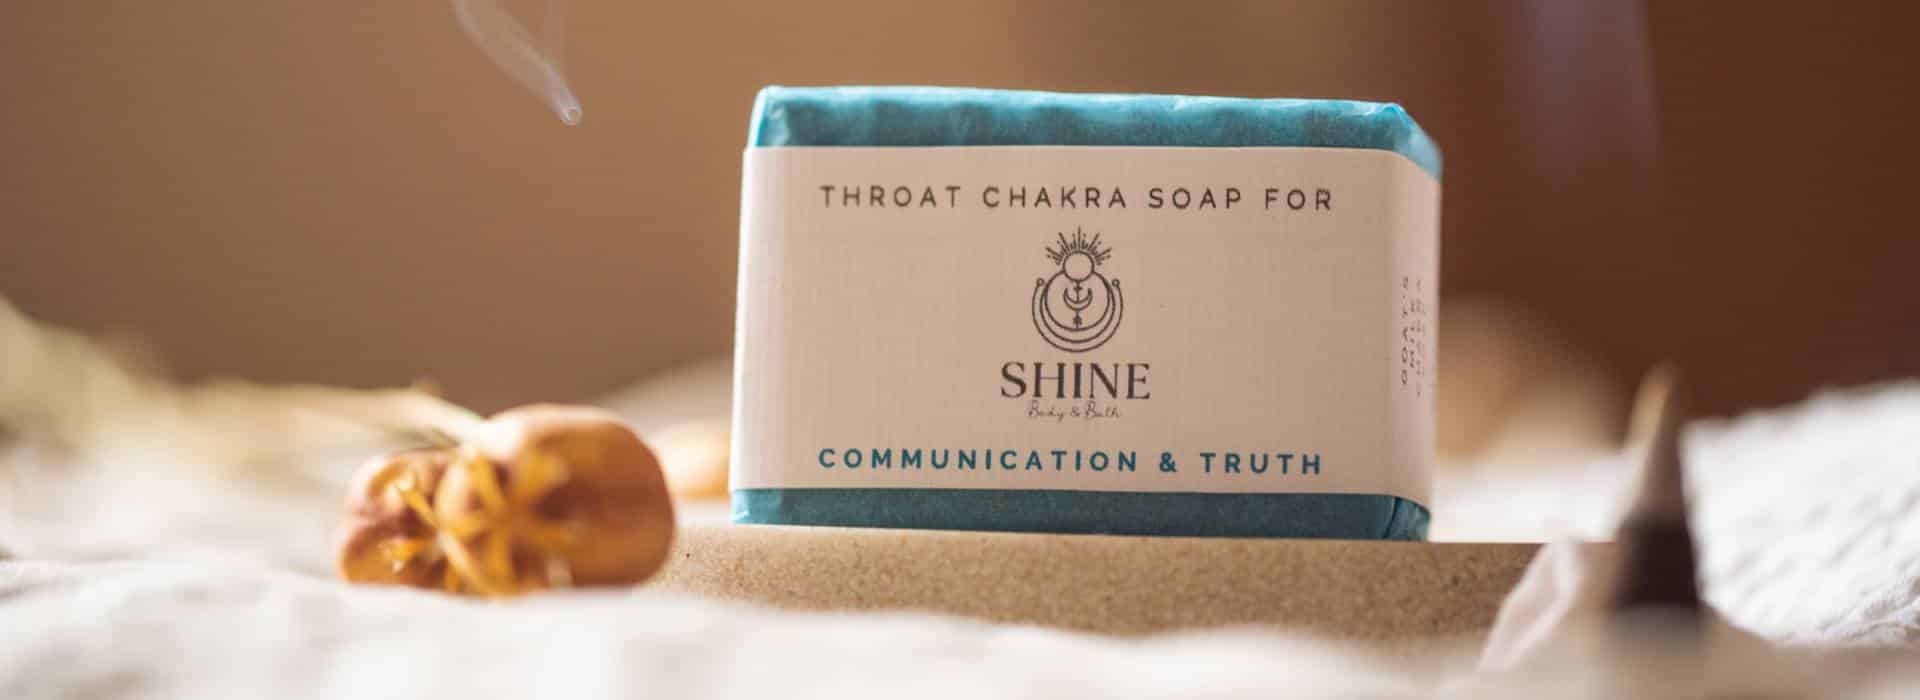 Throat Chakra Soap, wrapped | Homepage banner | Shine Body & Bath